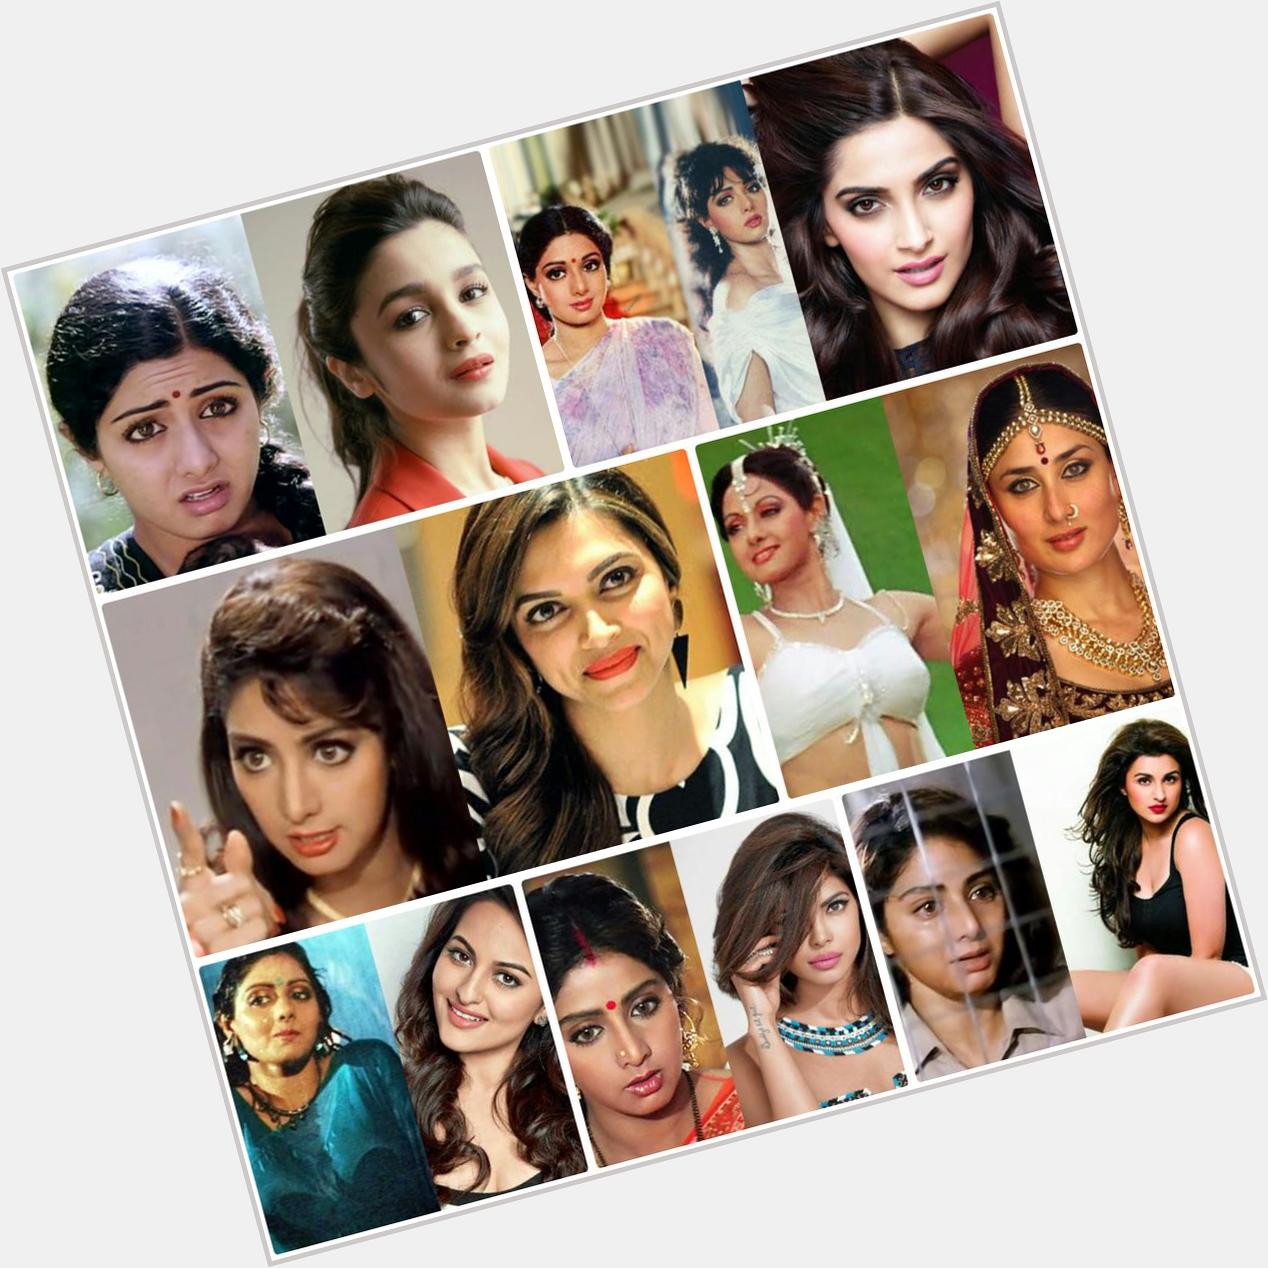 Kareena,Deepika,Priyanka-7 actresses who can reprise Sri s iconic roles 
Happy Birthday Sridevi 